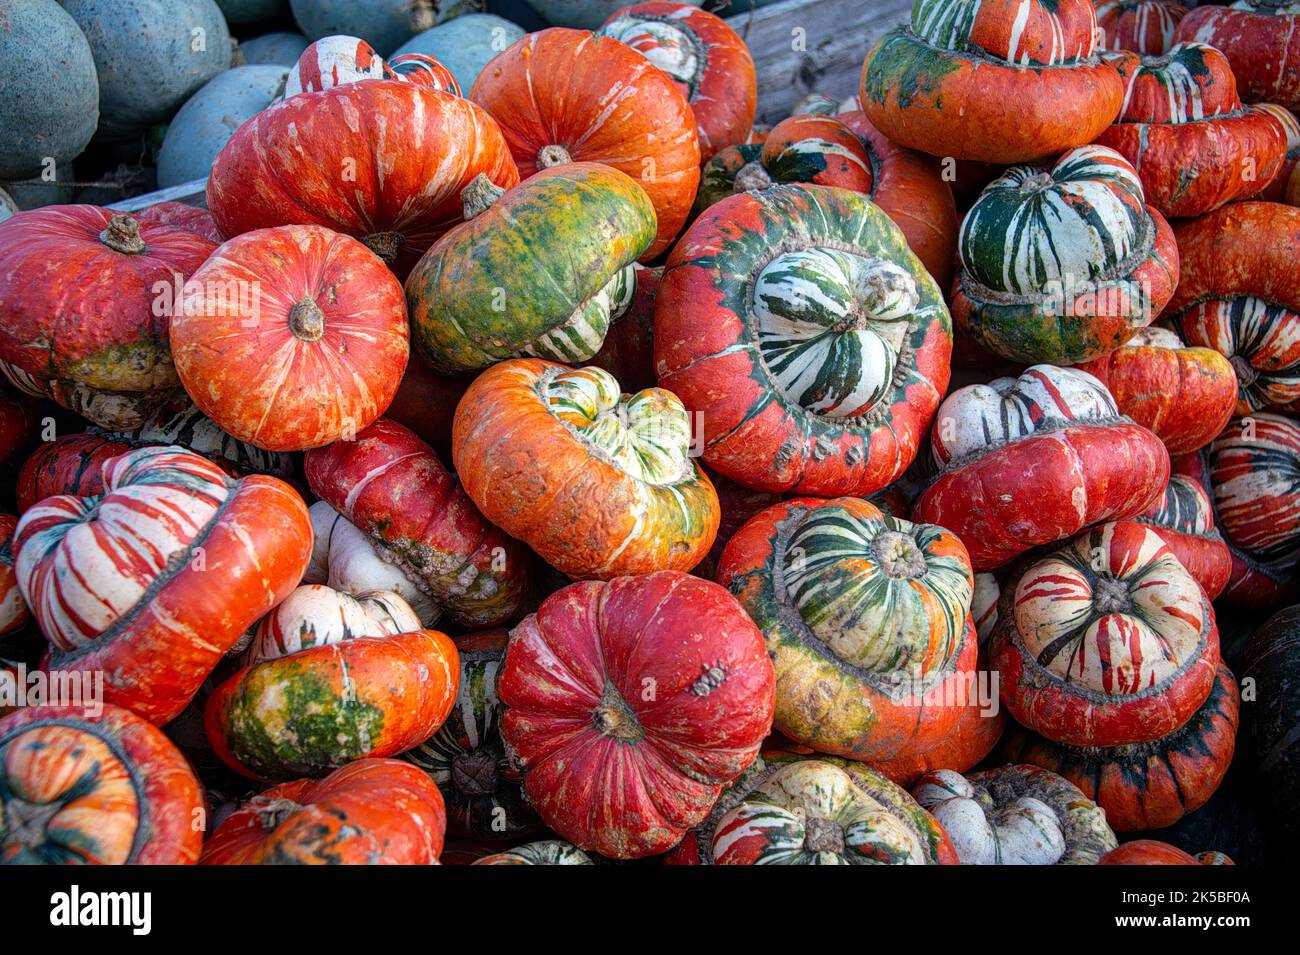 Turban squash pumpkins Stock Photo